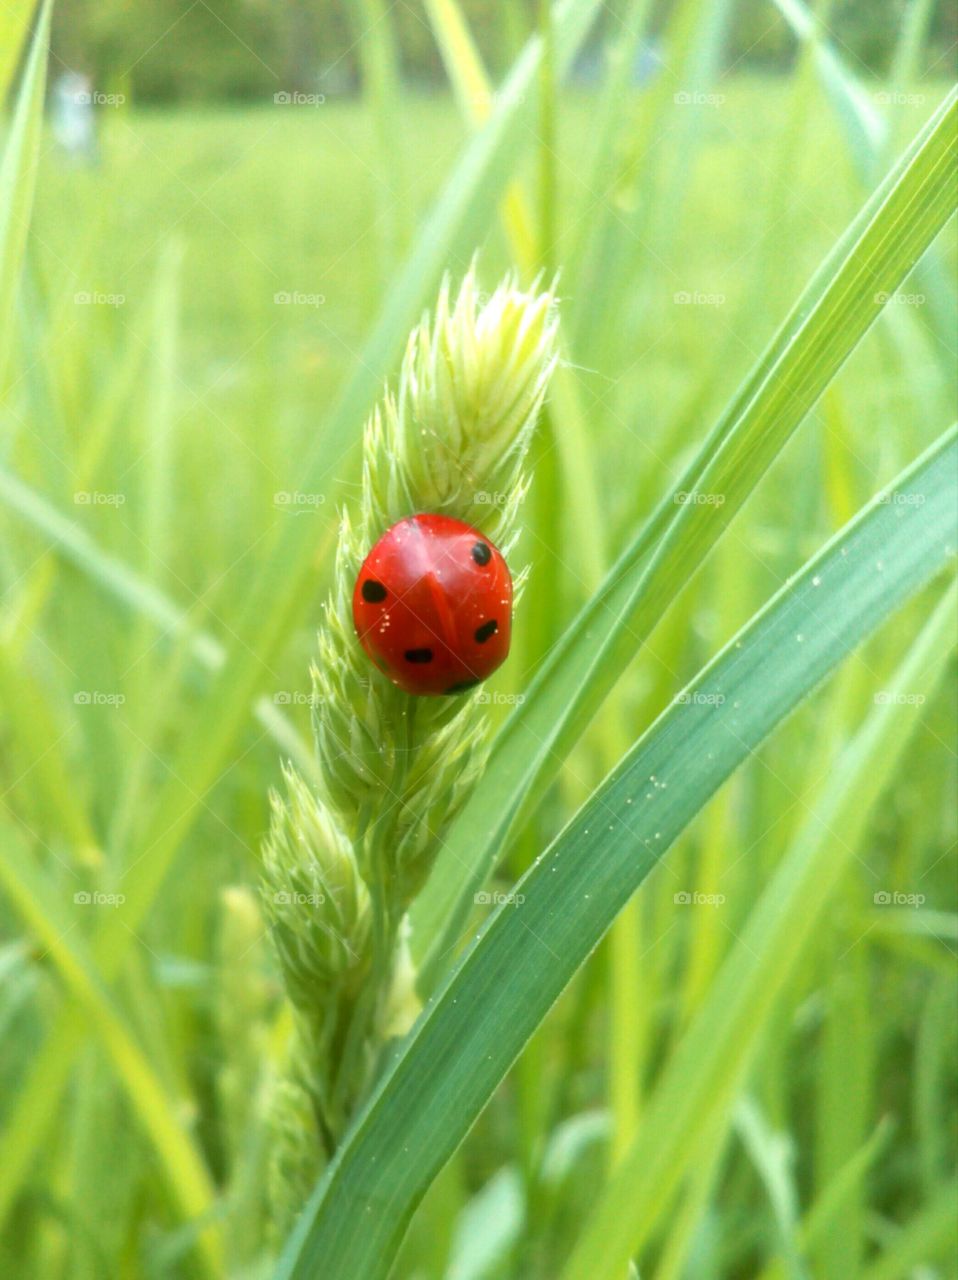 Ladybug in green grass